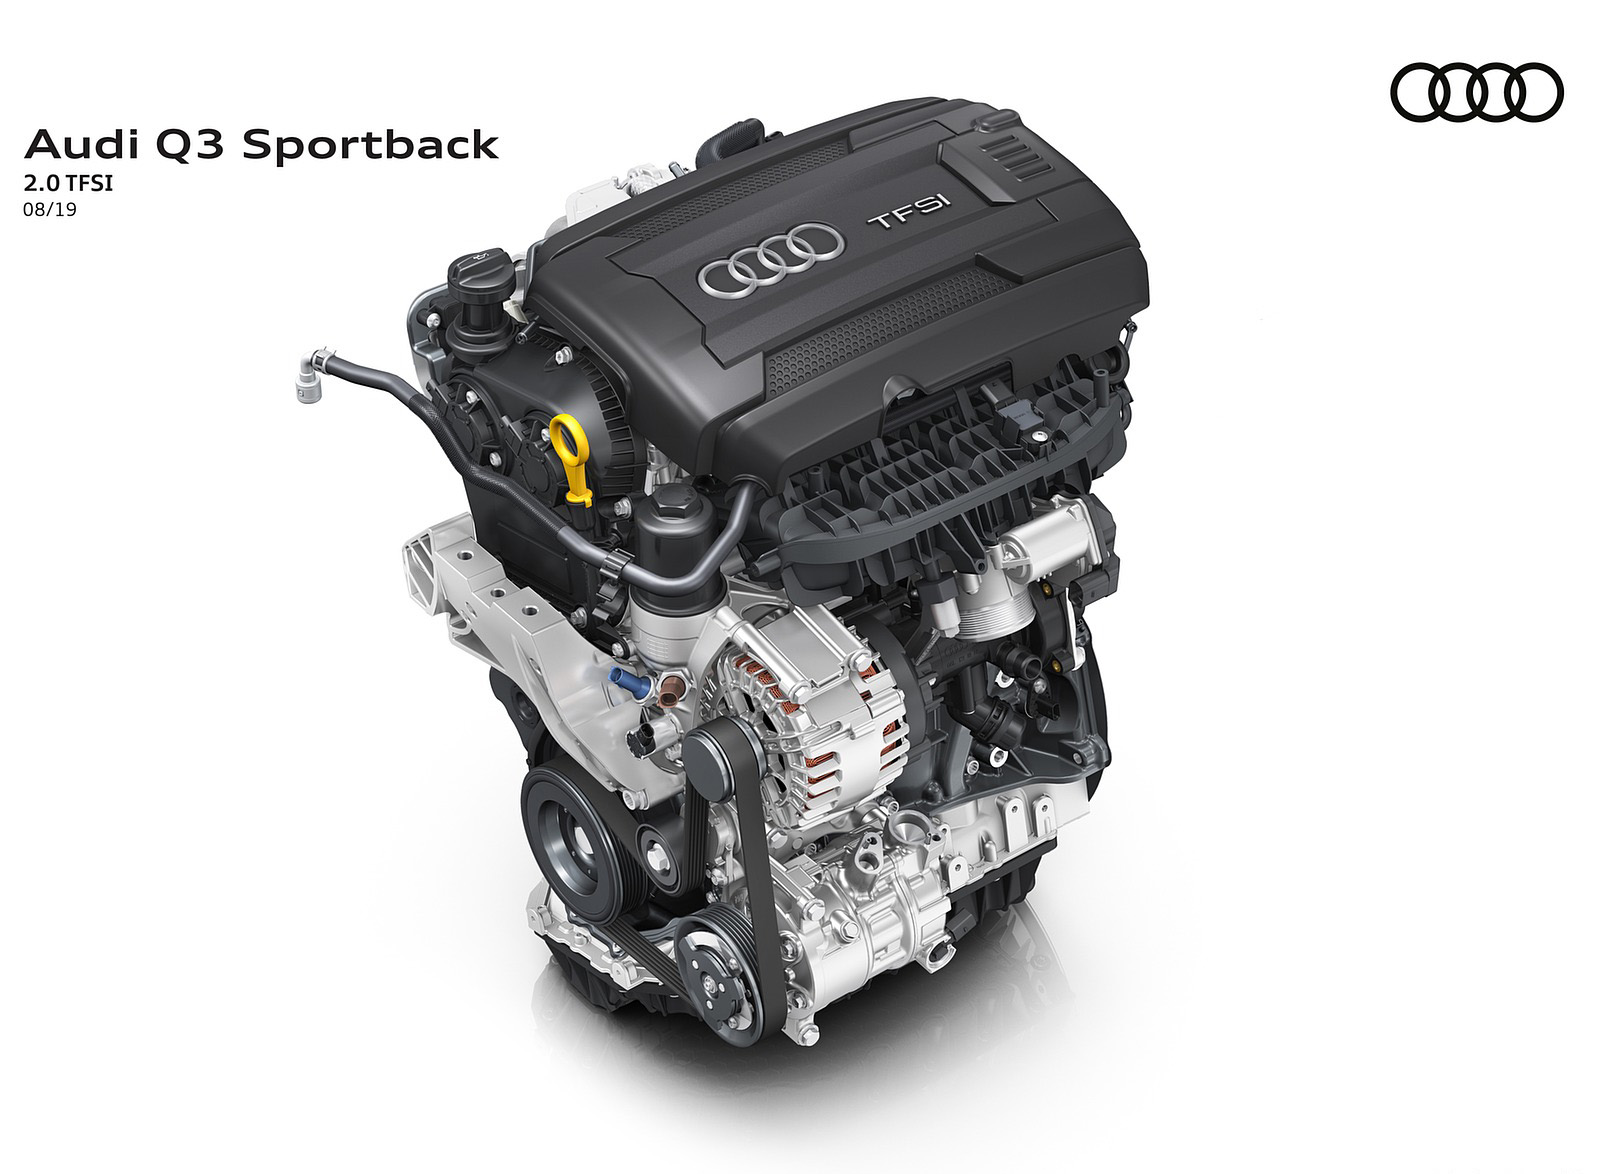 2020 Audi Q3 Sportback 2.0 TFSI Wallpapers #271 of 285